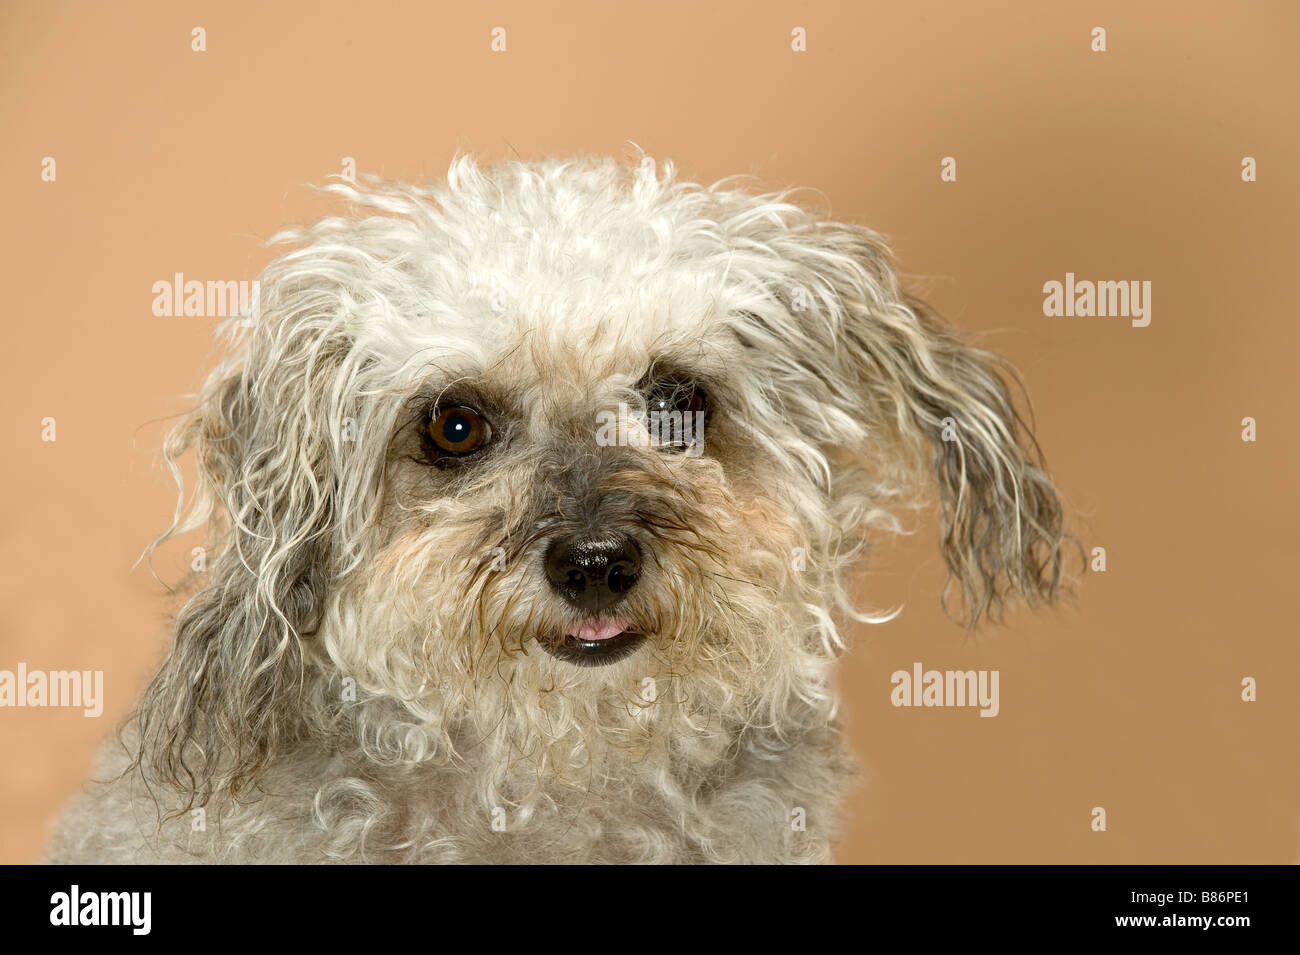 half breed dog - portrait Stock Photo